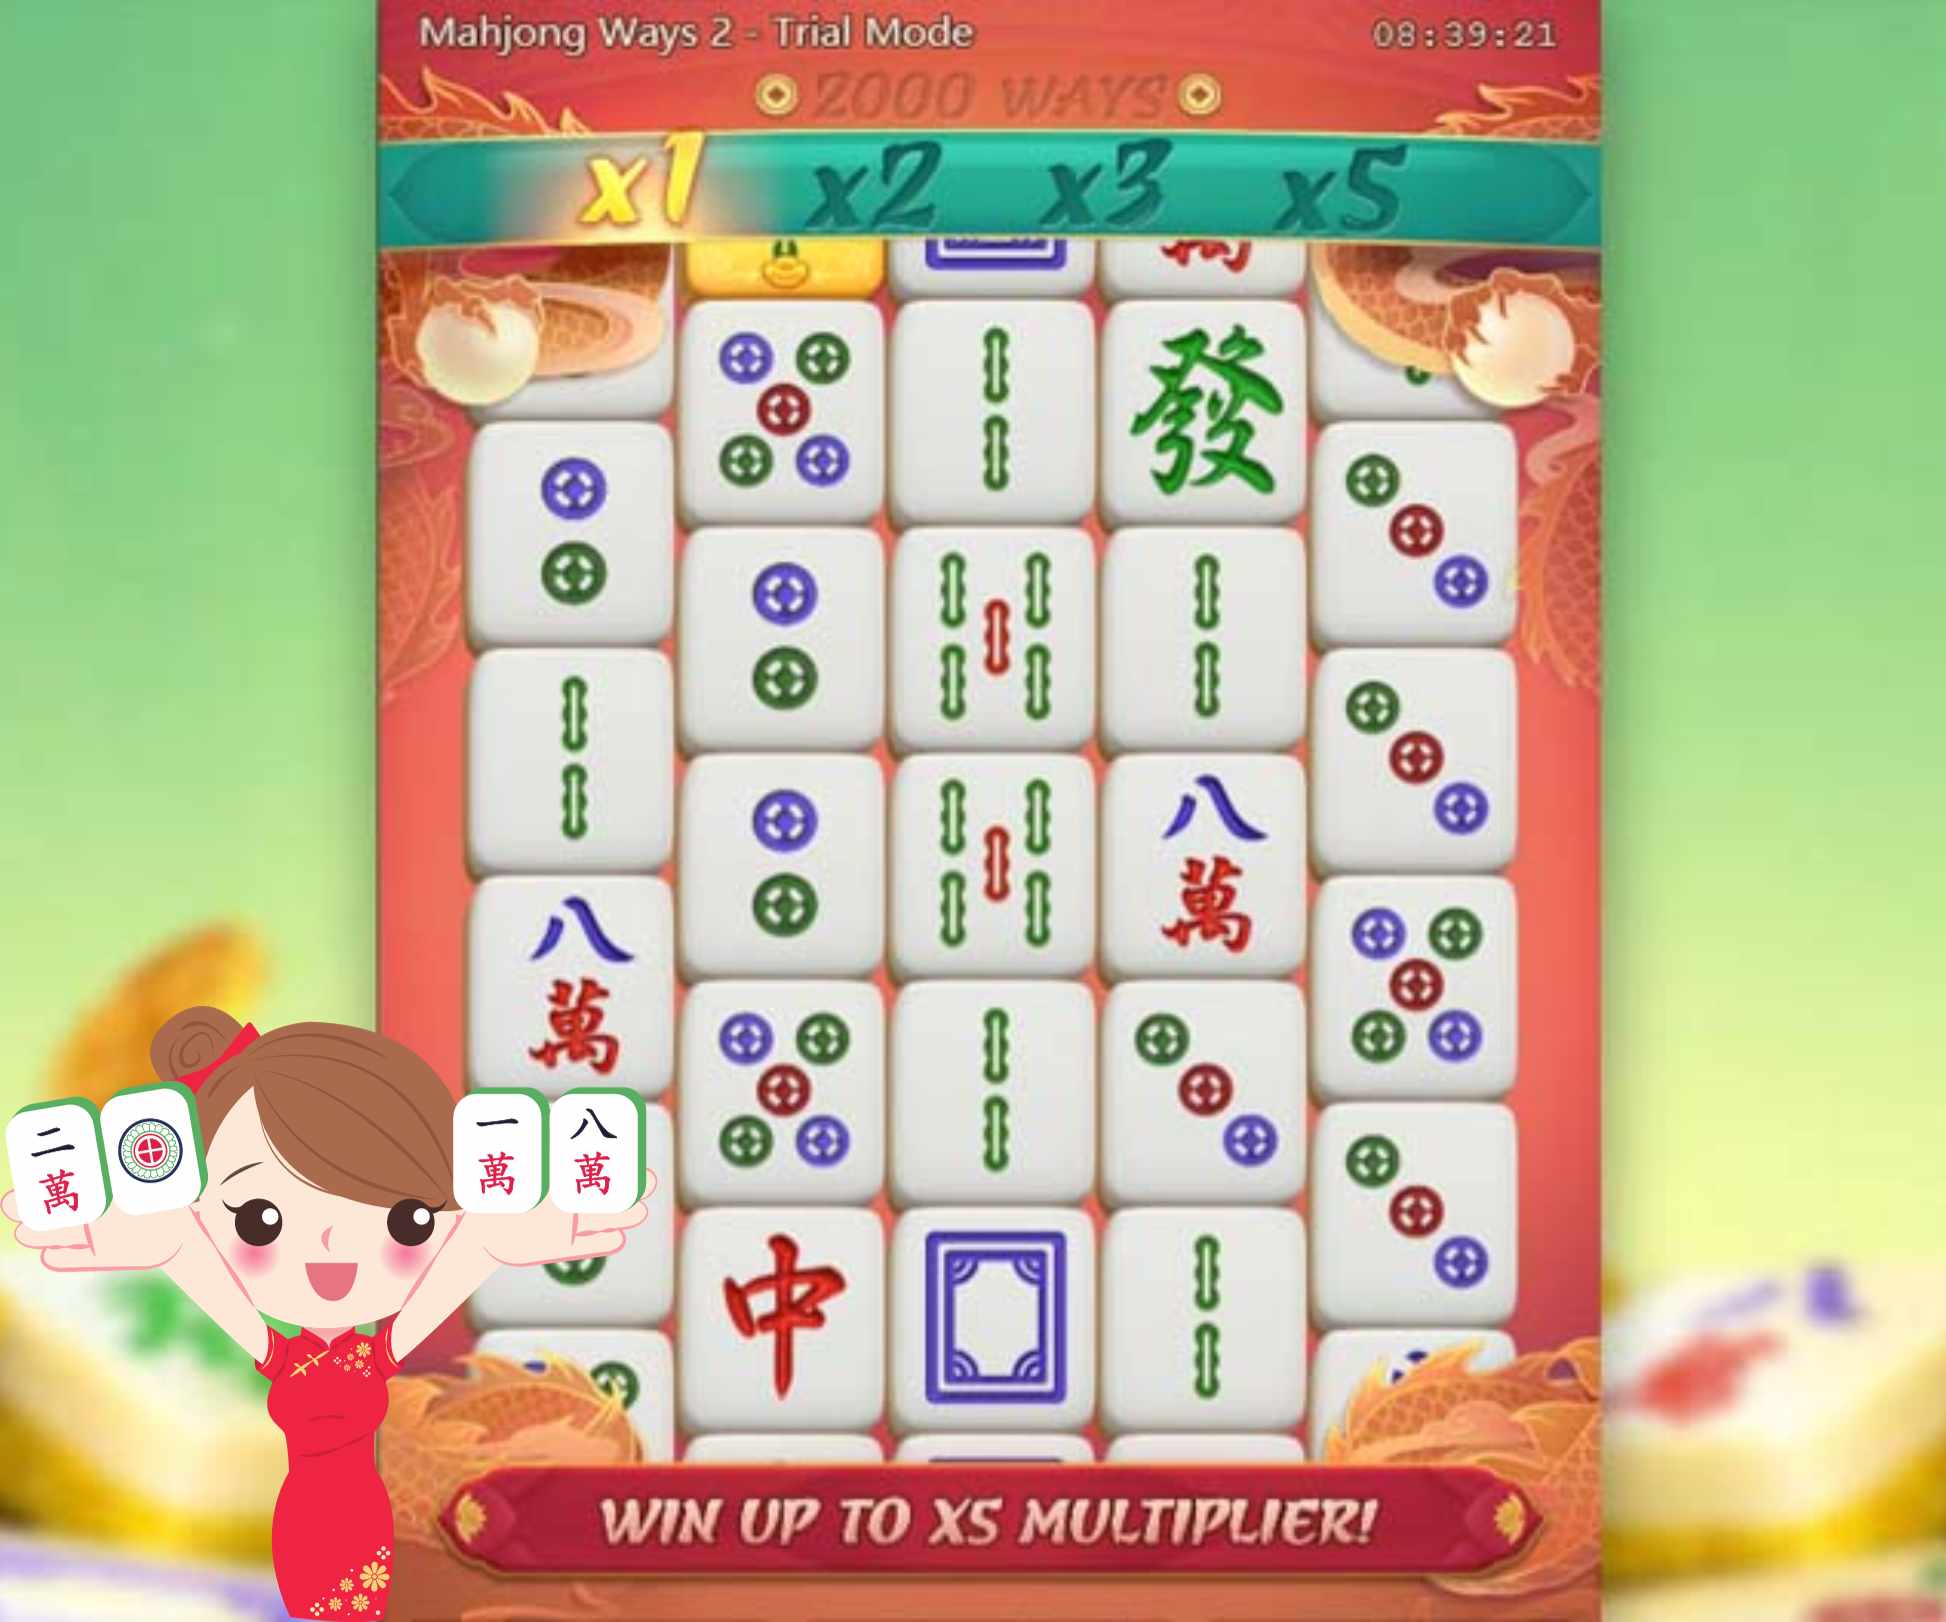 Mahjong Ways 2 The best mahjong game has a slot version